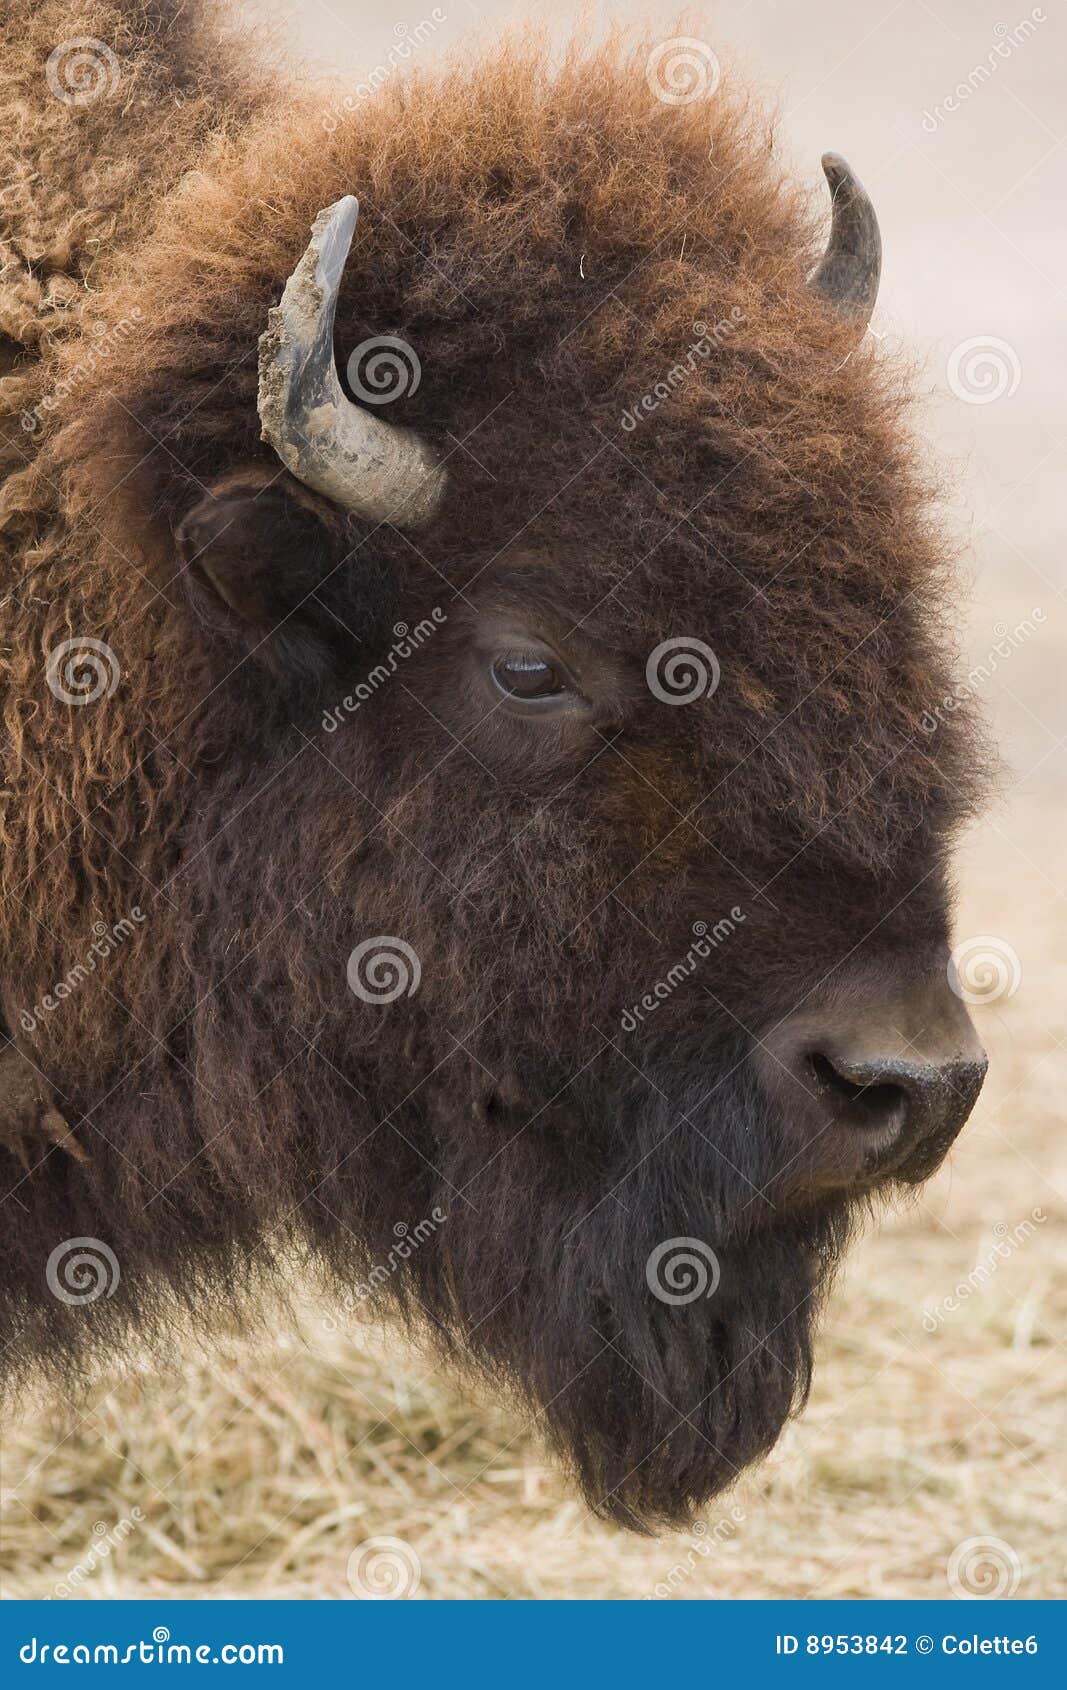 american bison or buffalo